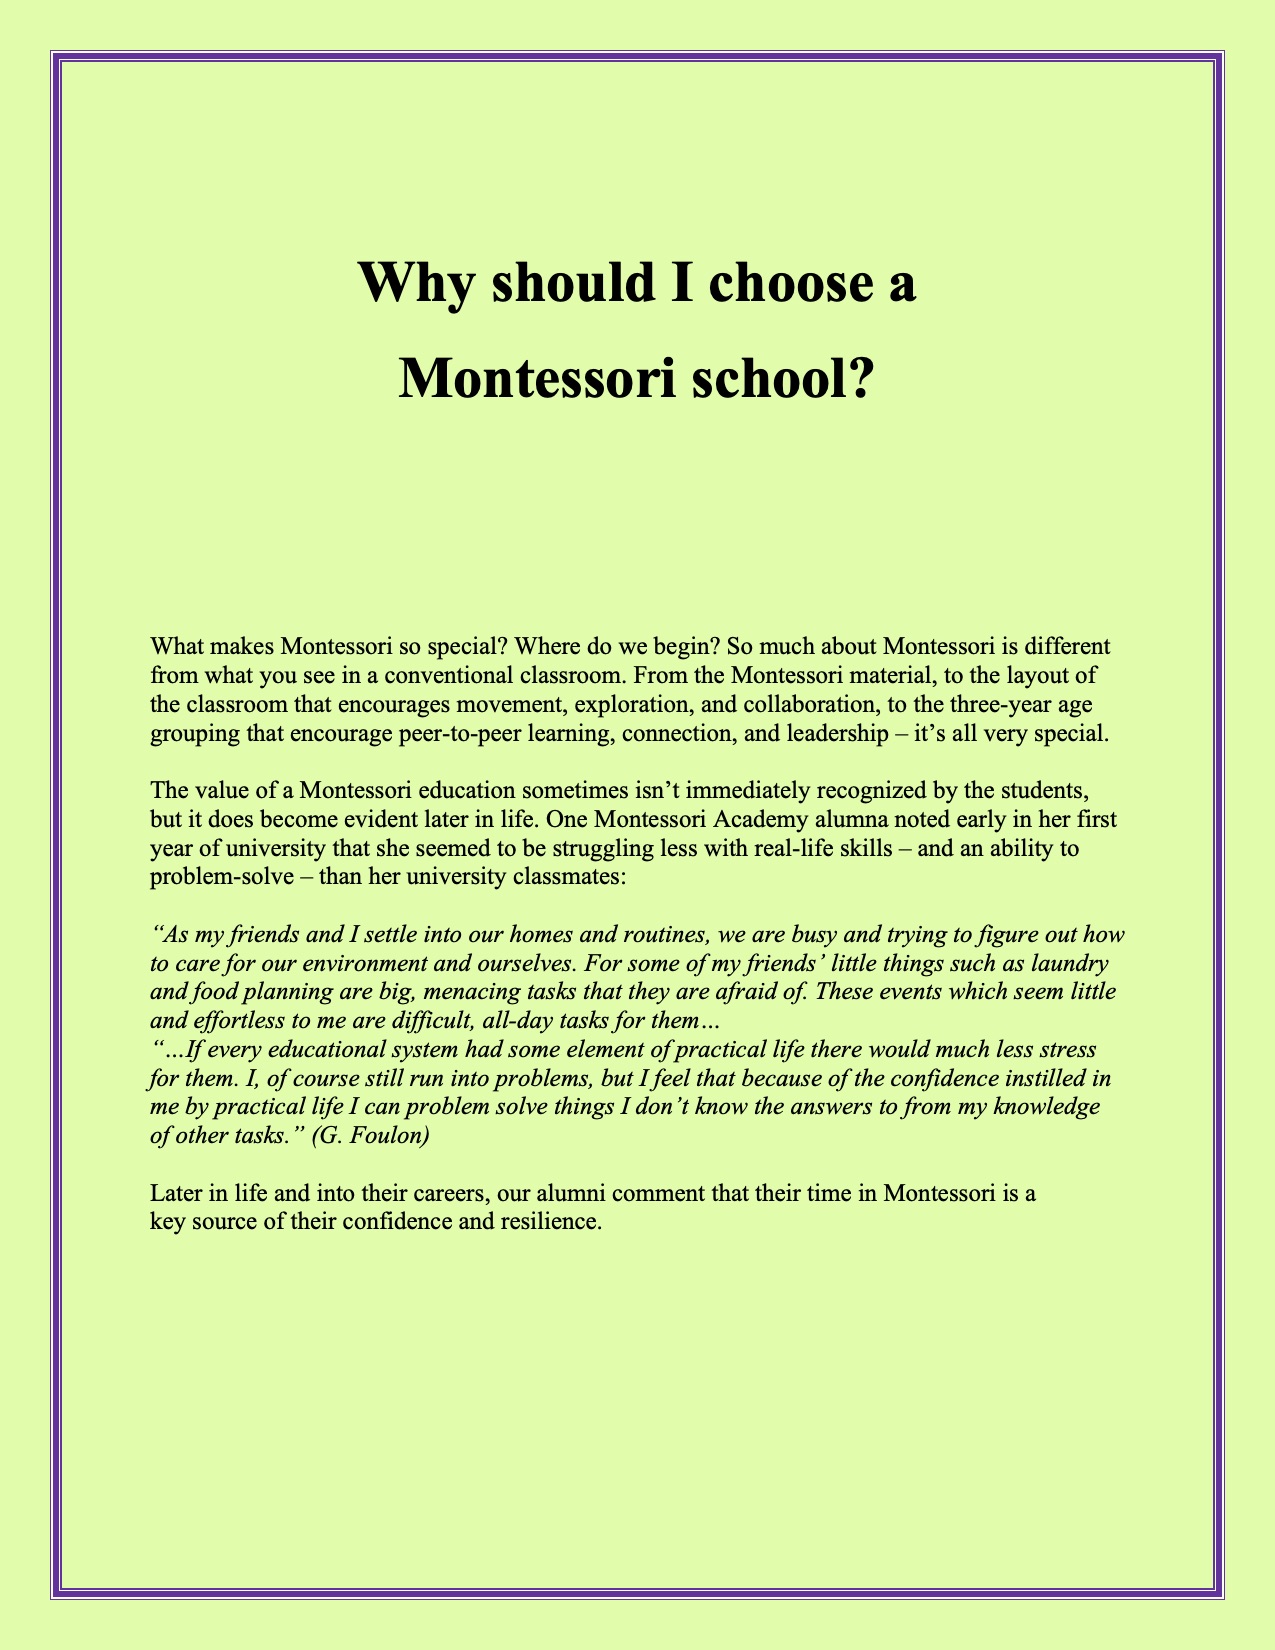 Why should I choose a Montessori school